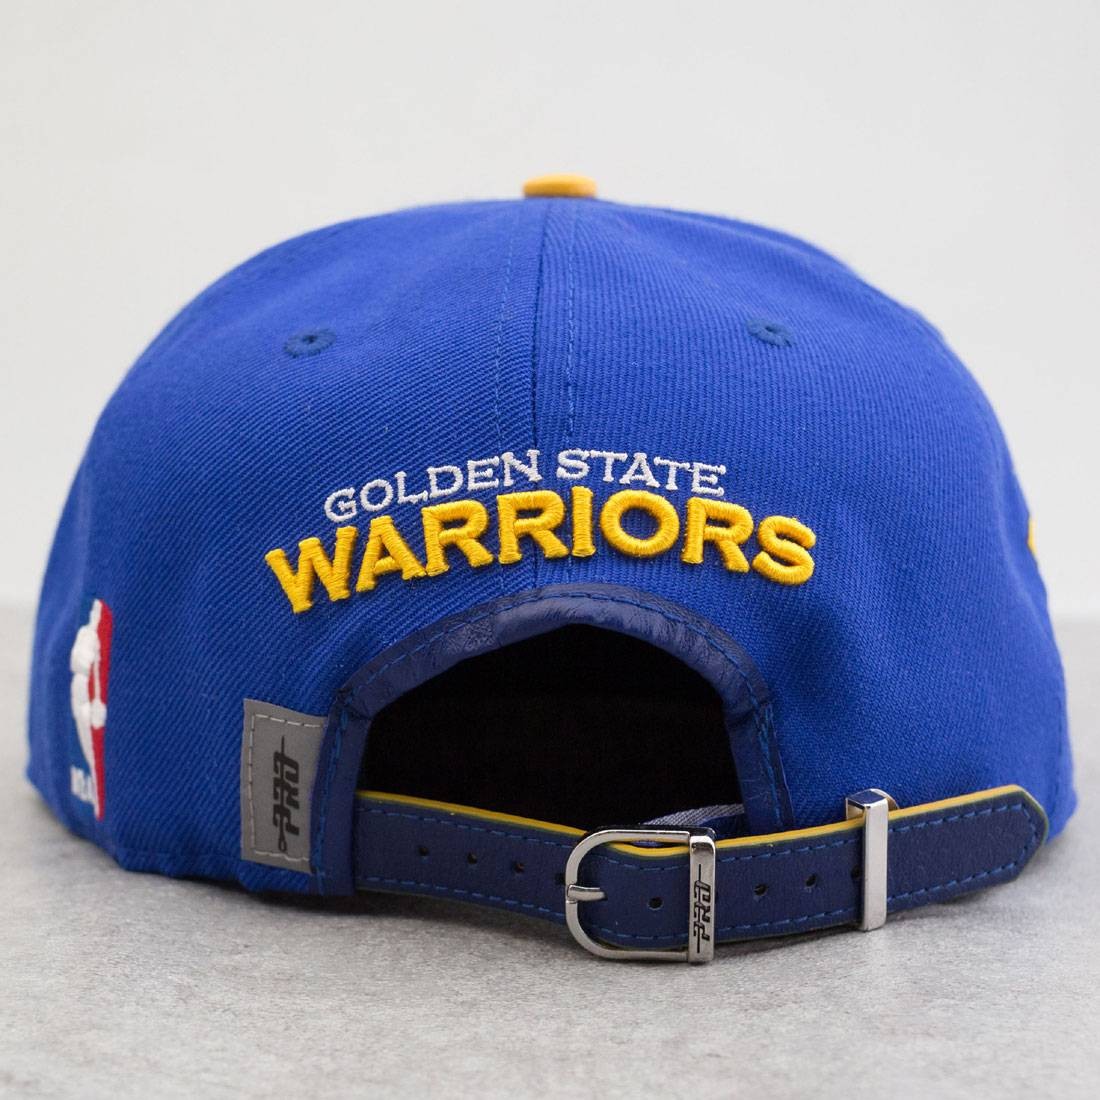 the warriors hat